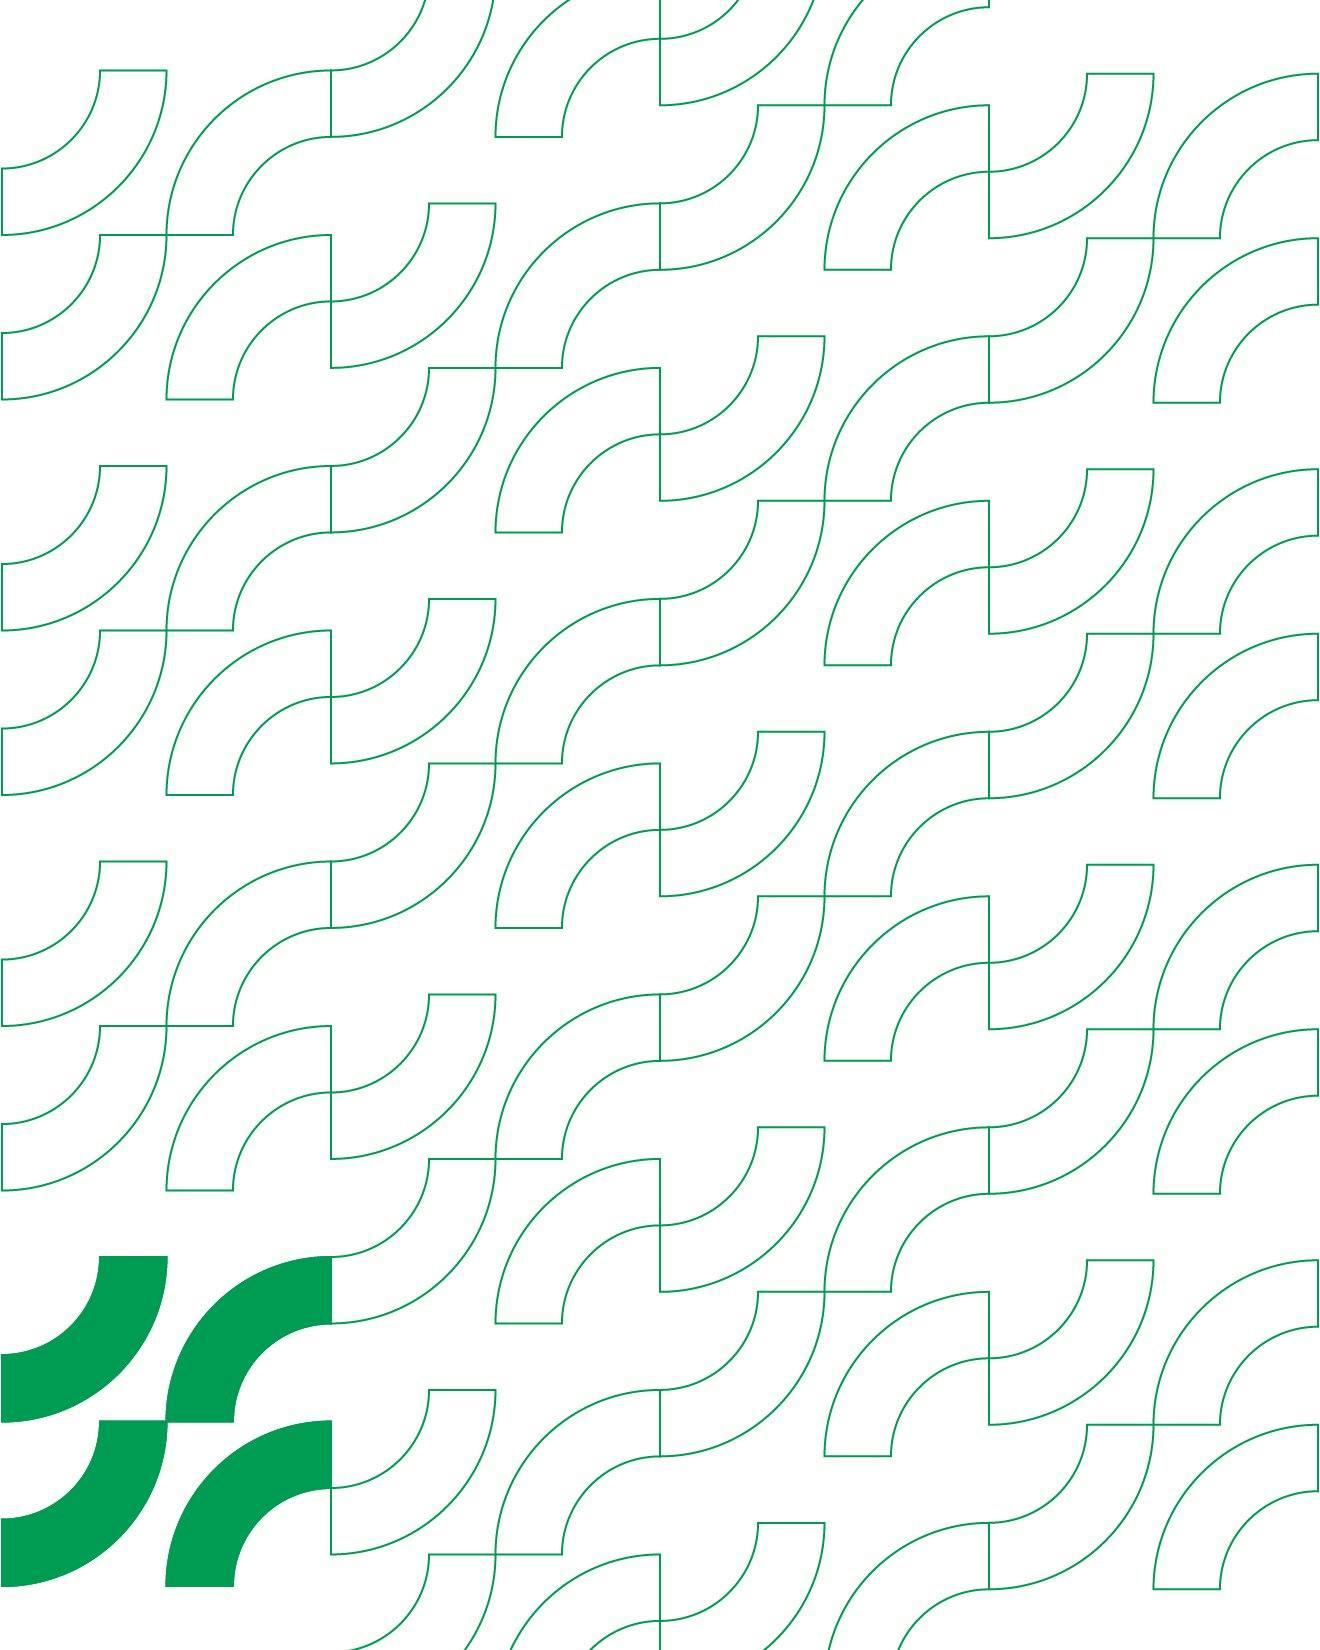 Green Optimize logo